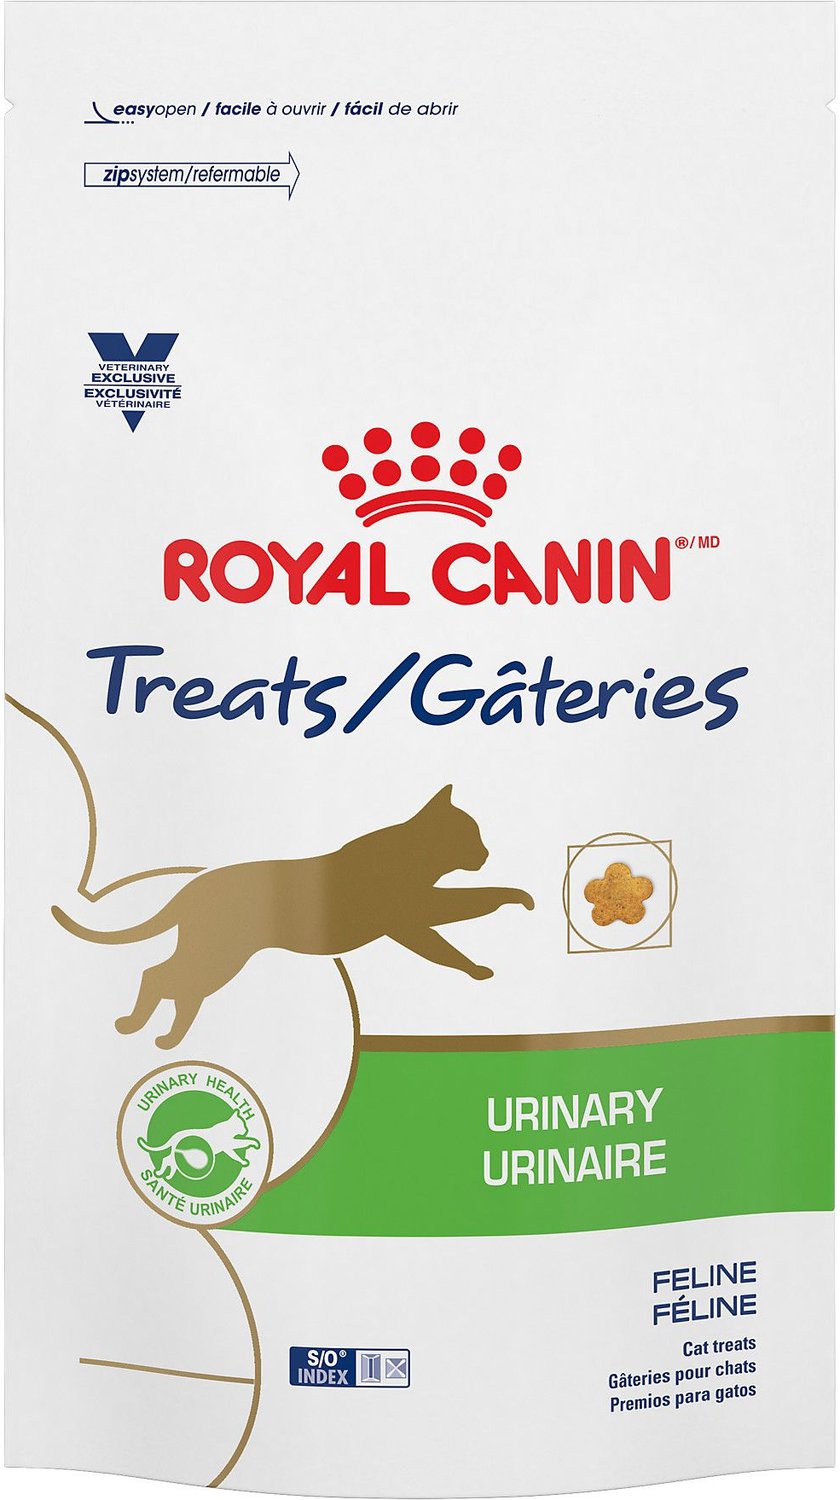 ROYAL CANIN VETERINARY DIET Urinary Feline Cat Treats, 0.49lb bag